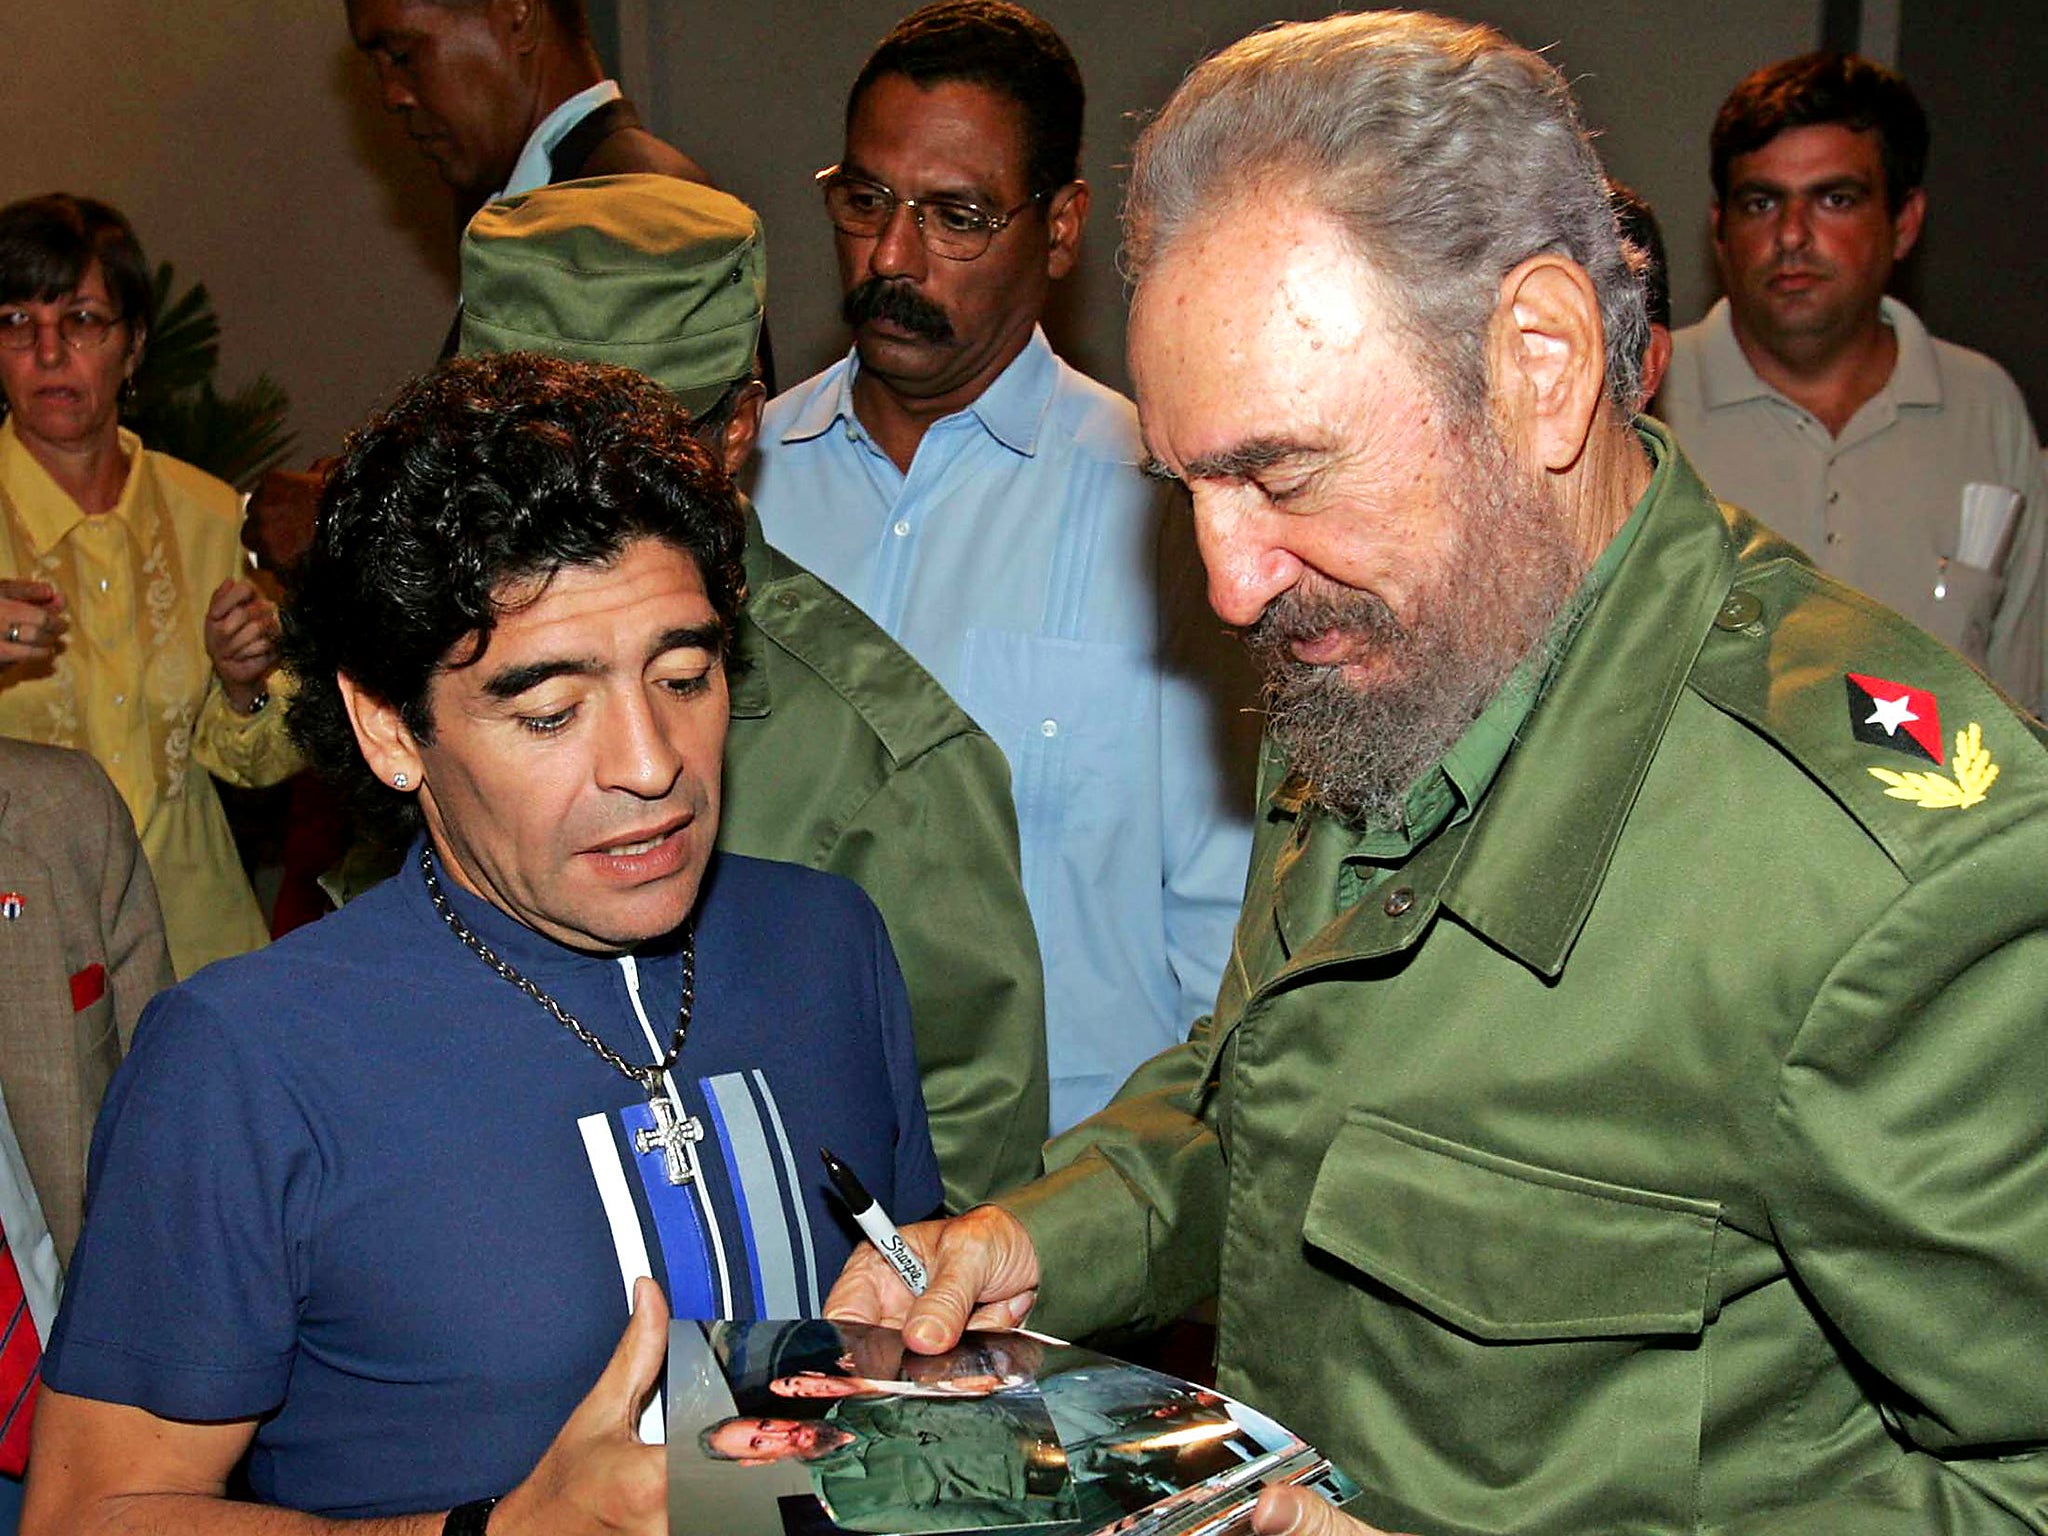 Diego Maradona talks to Castro